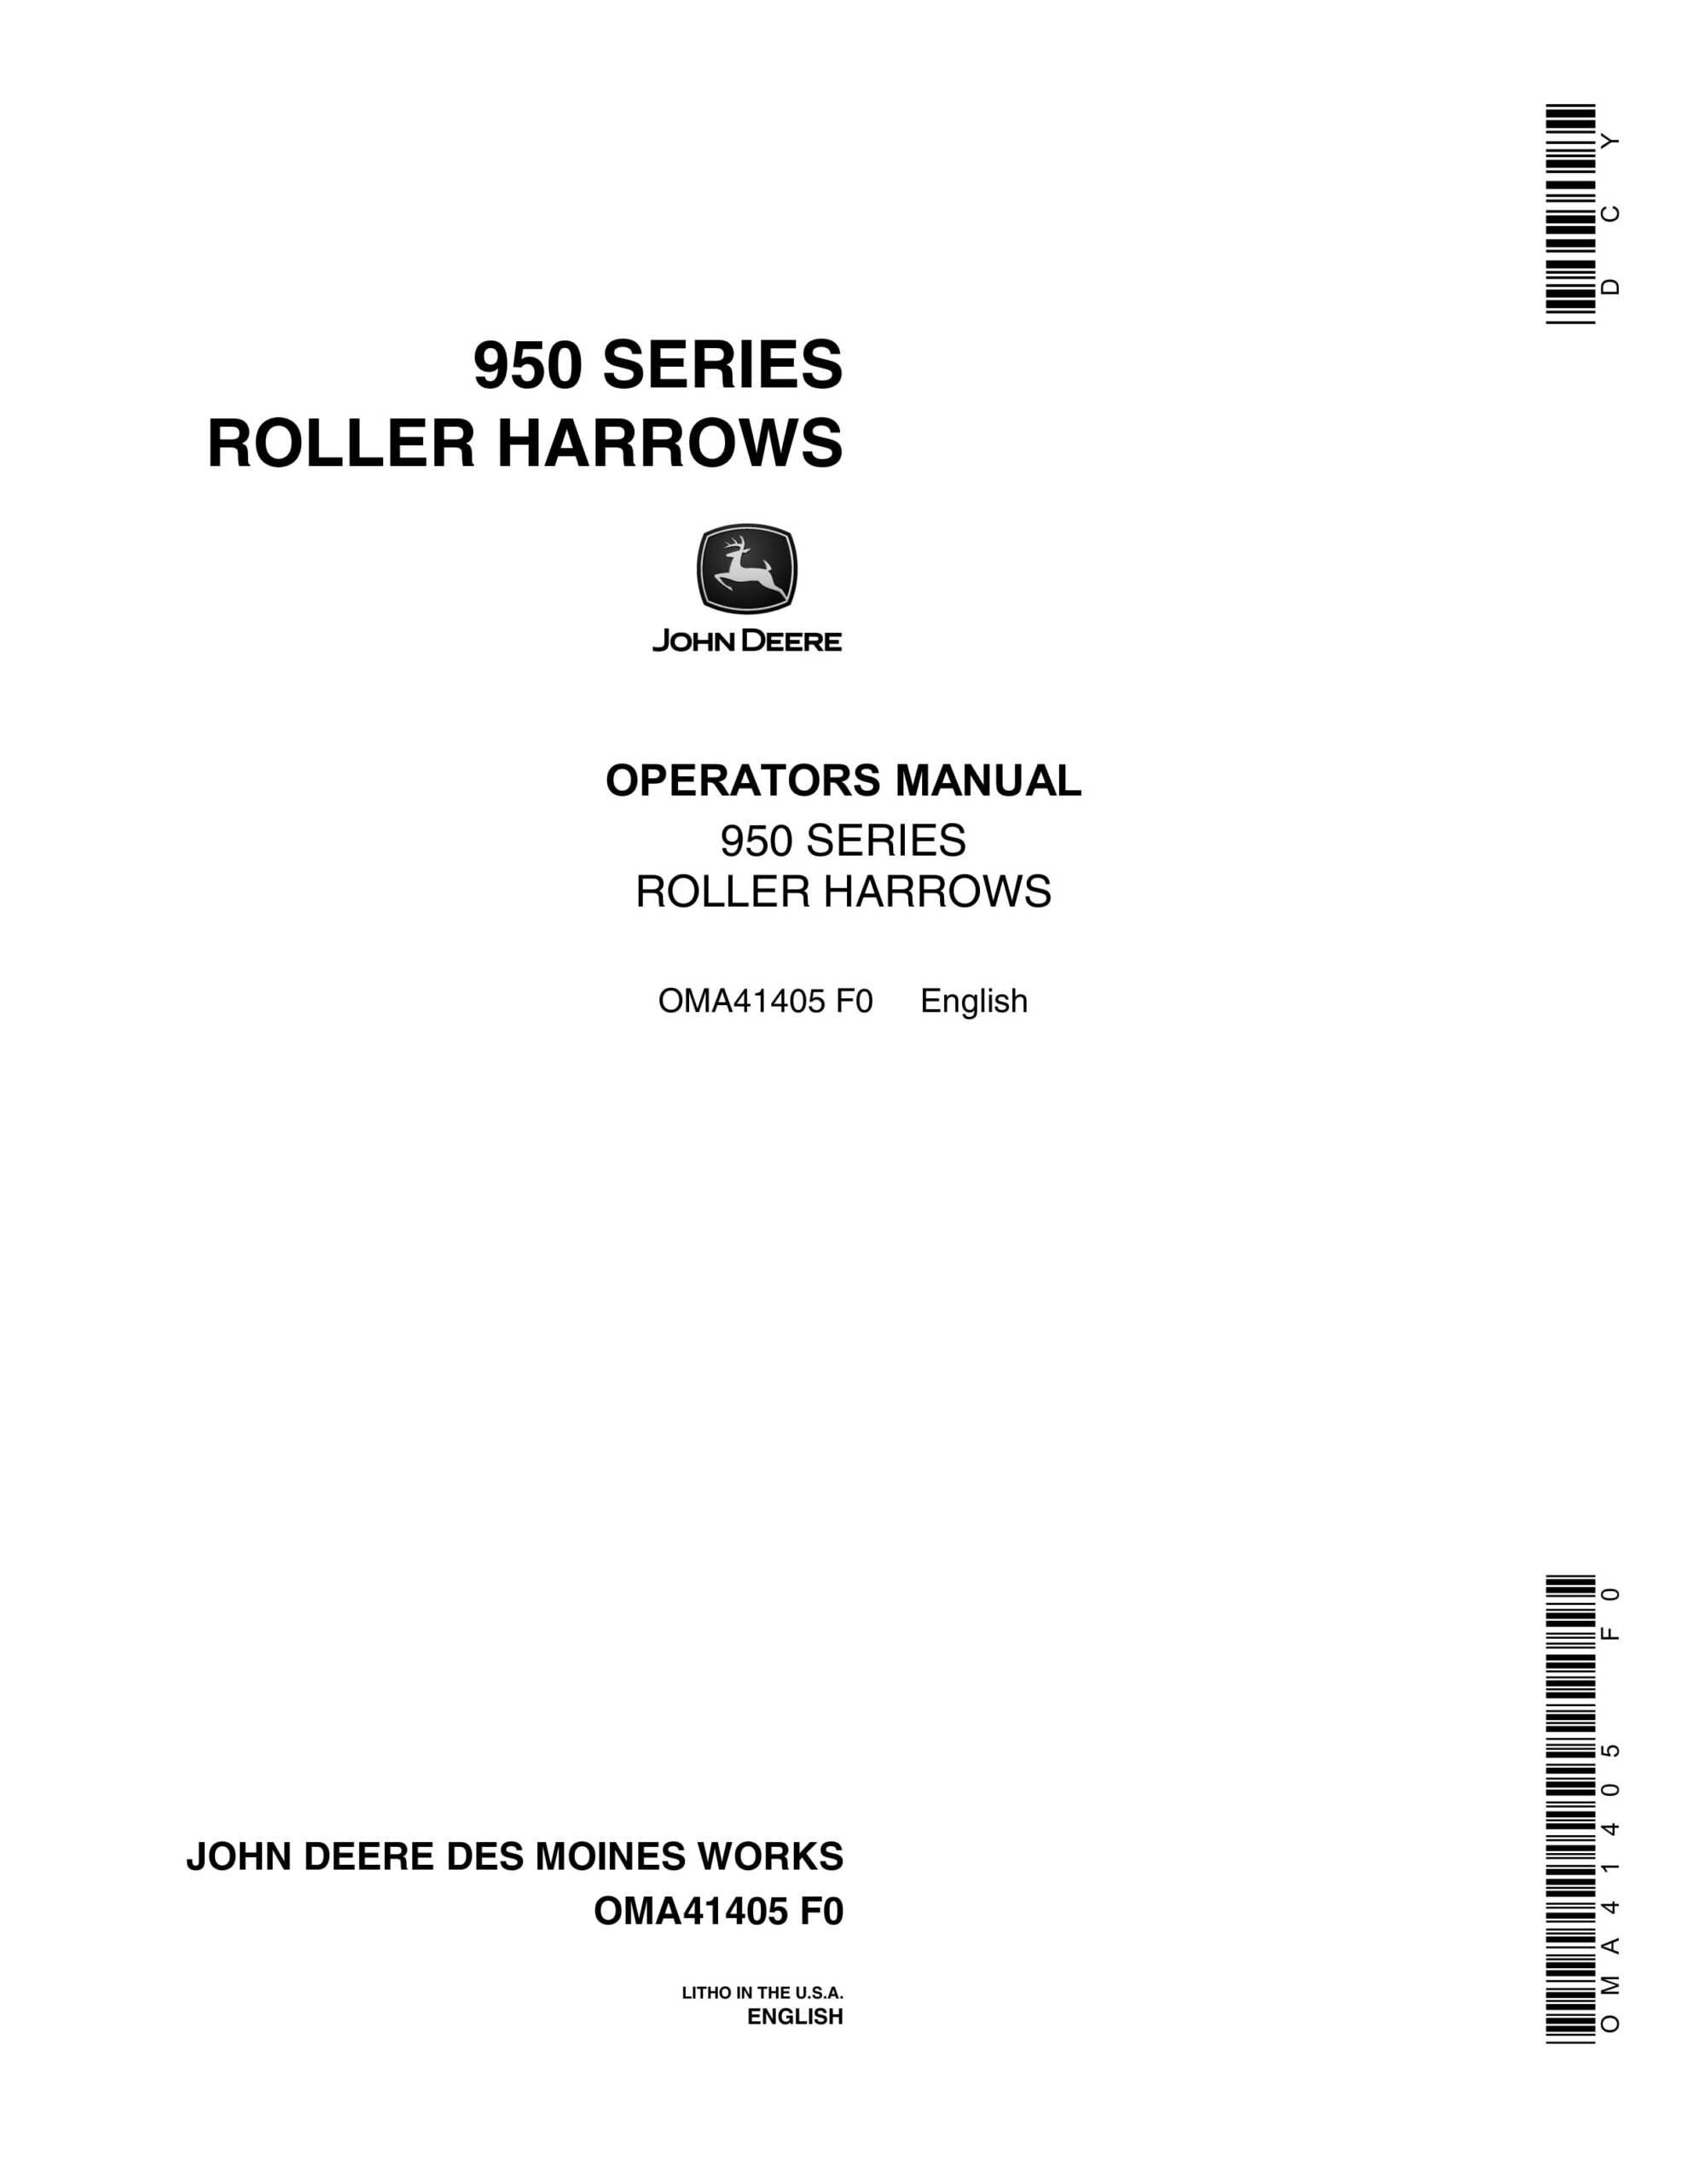 John Deere 950 SERIES ROLLER HARROWS Operator Manual OMA41405-1